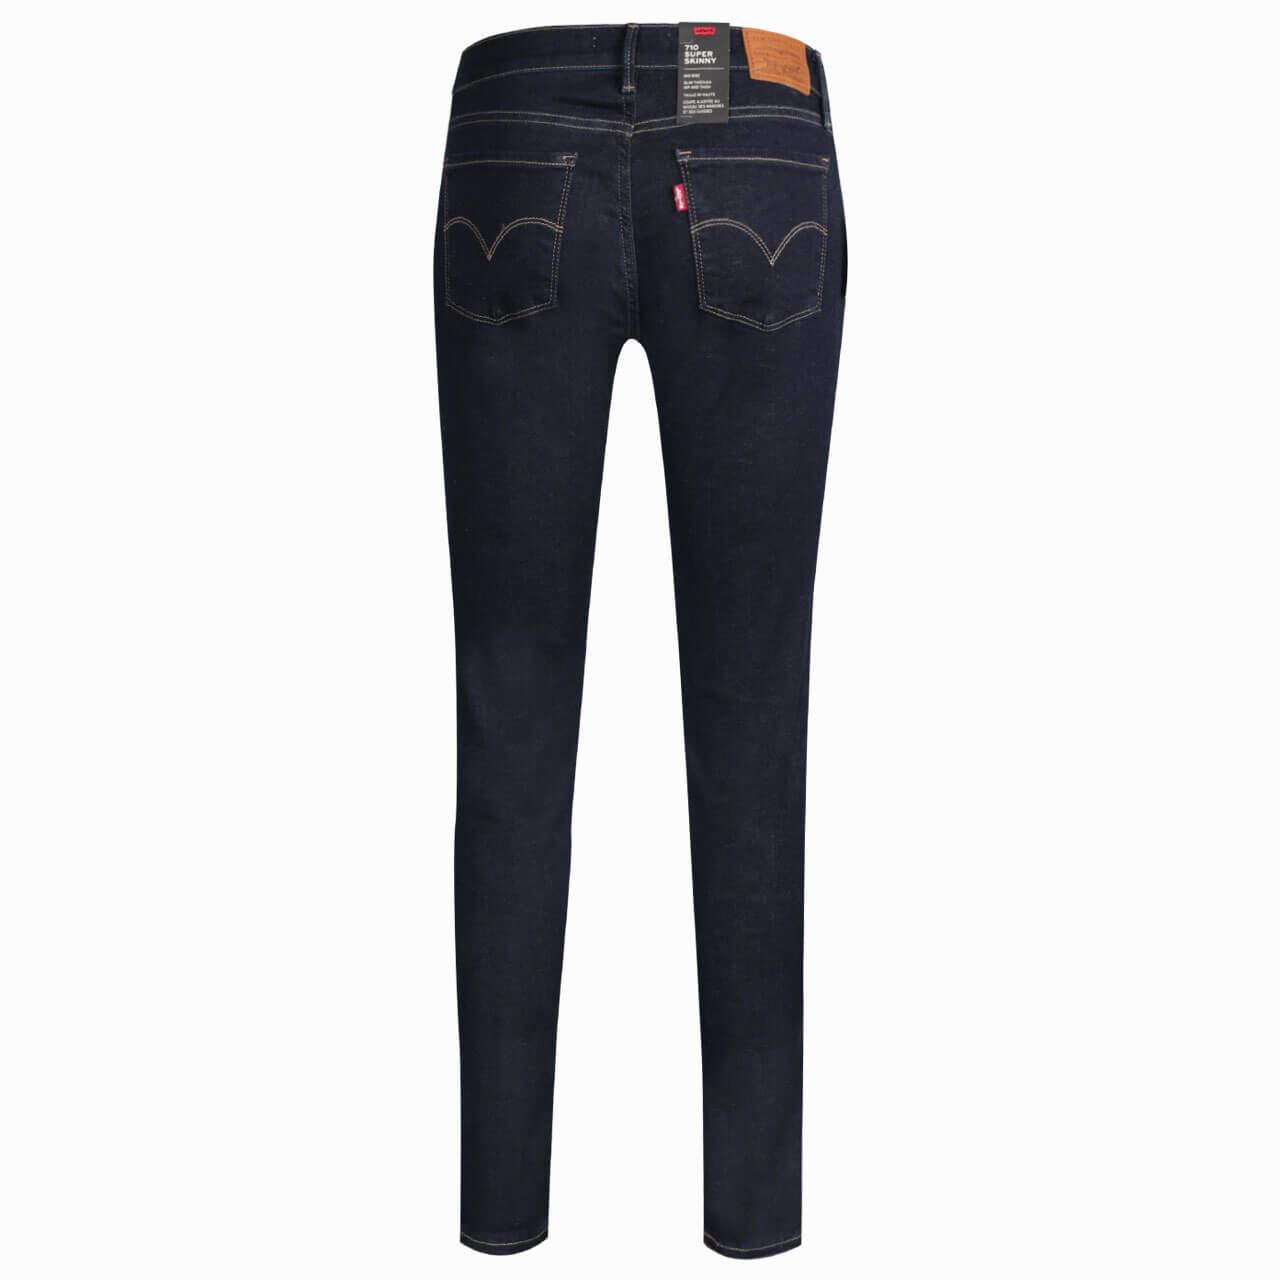 Levi's Jeans 710 Super Skinny für Damen in Dunkelblau, FarbNr.: 0038